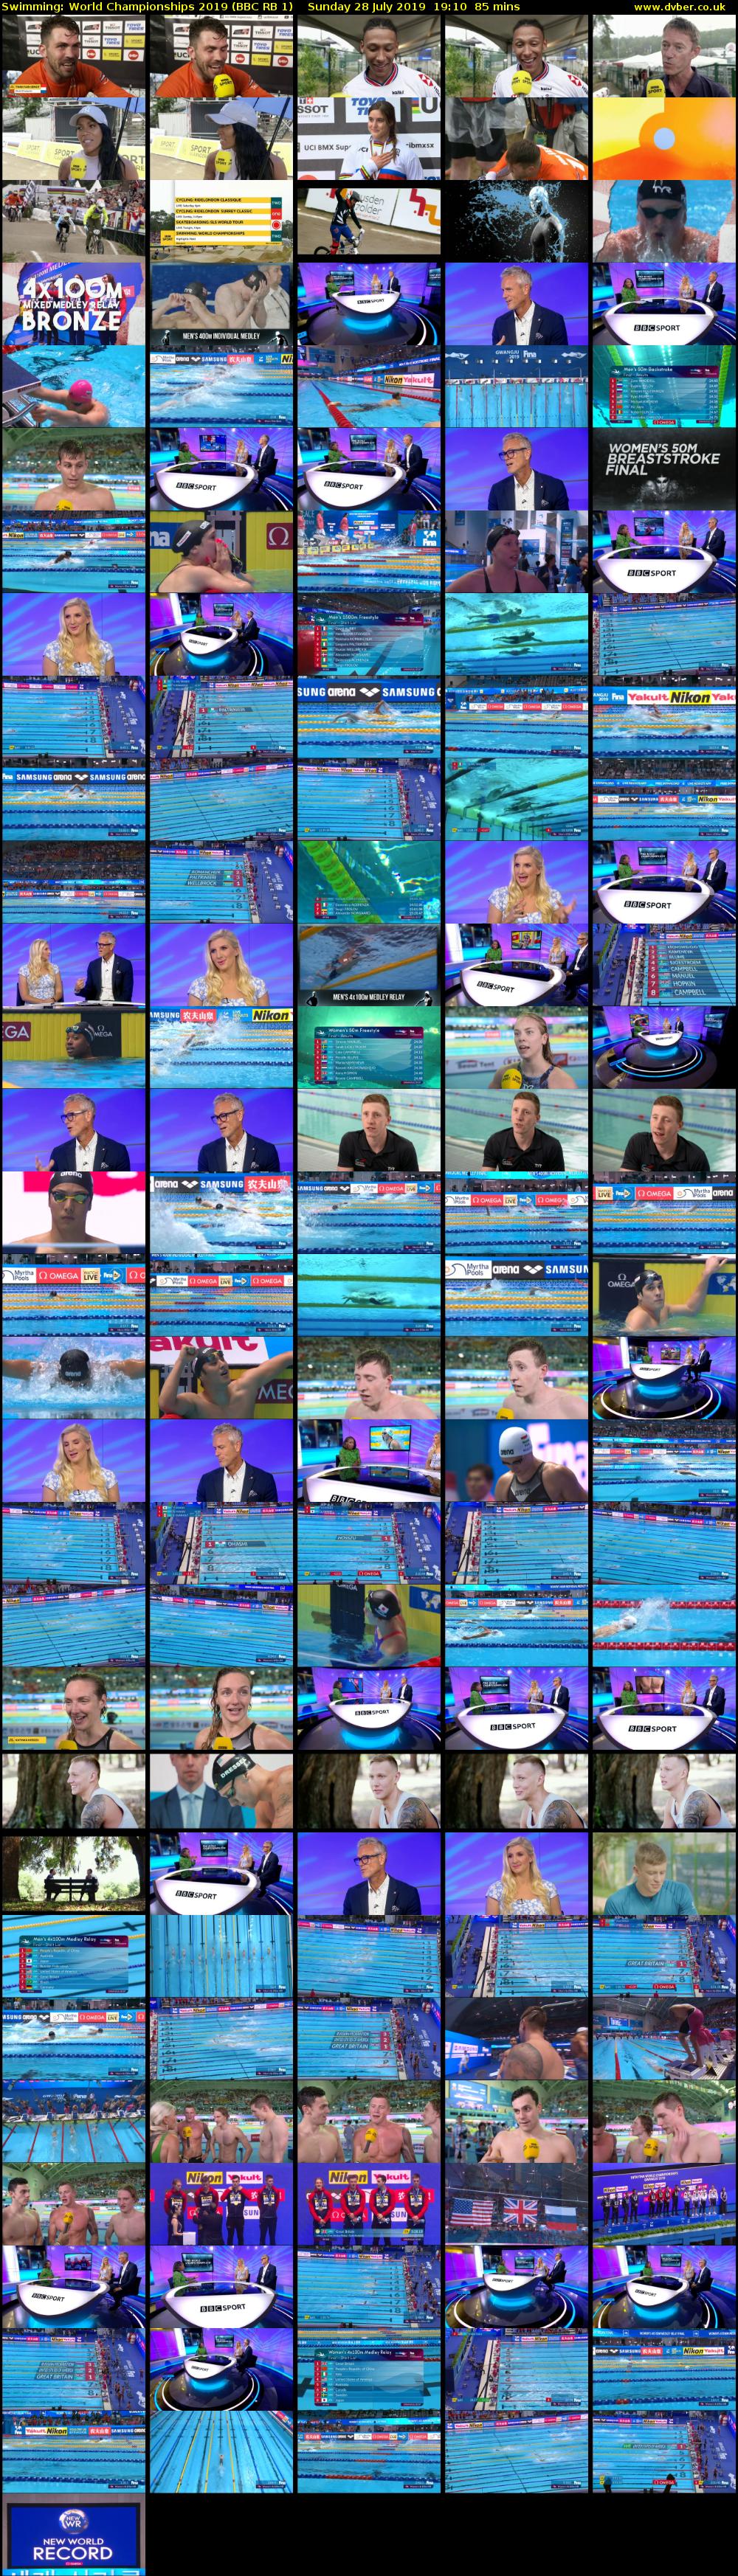 Swimming: World Championships 2019 (BBC RB 1) Sunday 28 July 2019 19:10 - 20:35